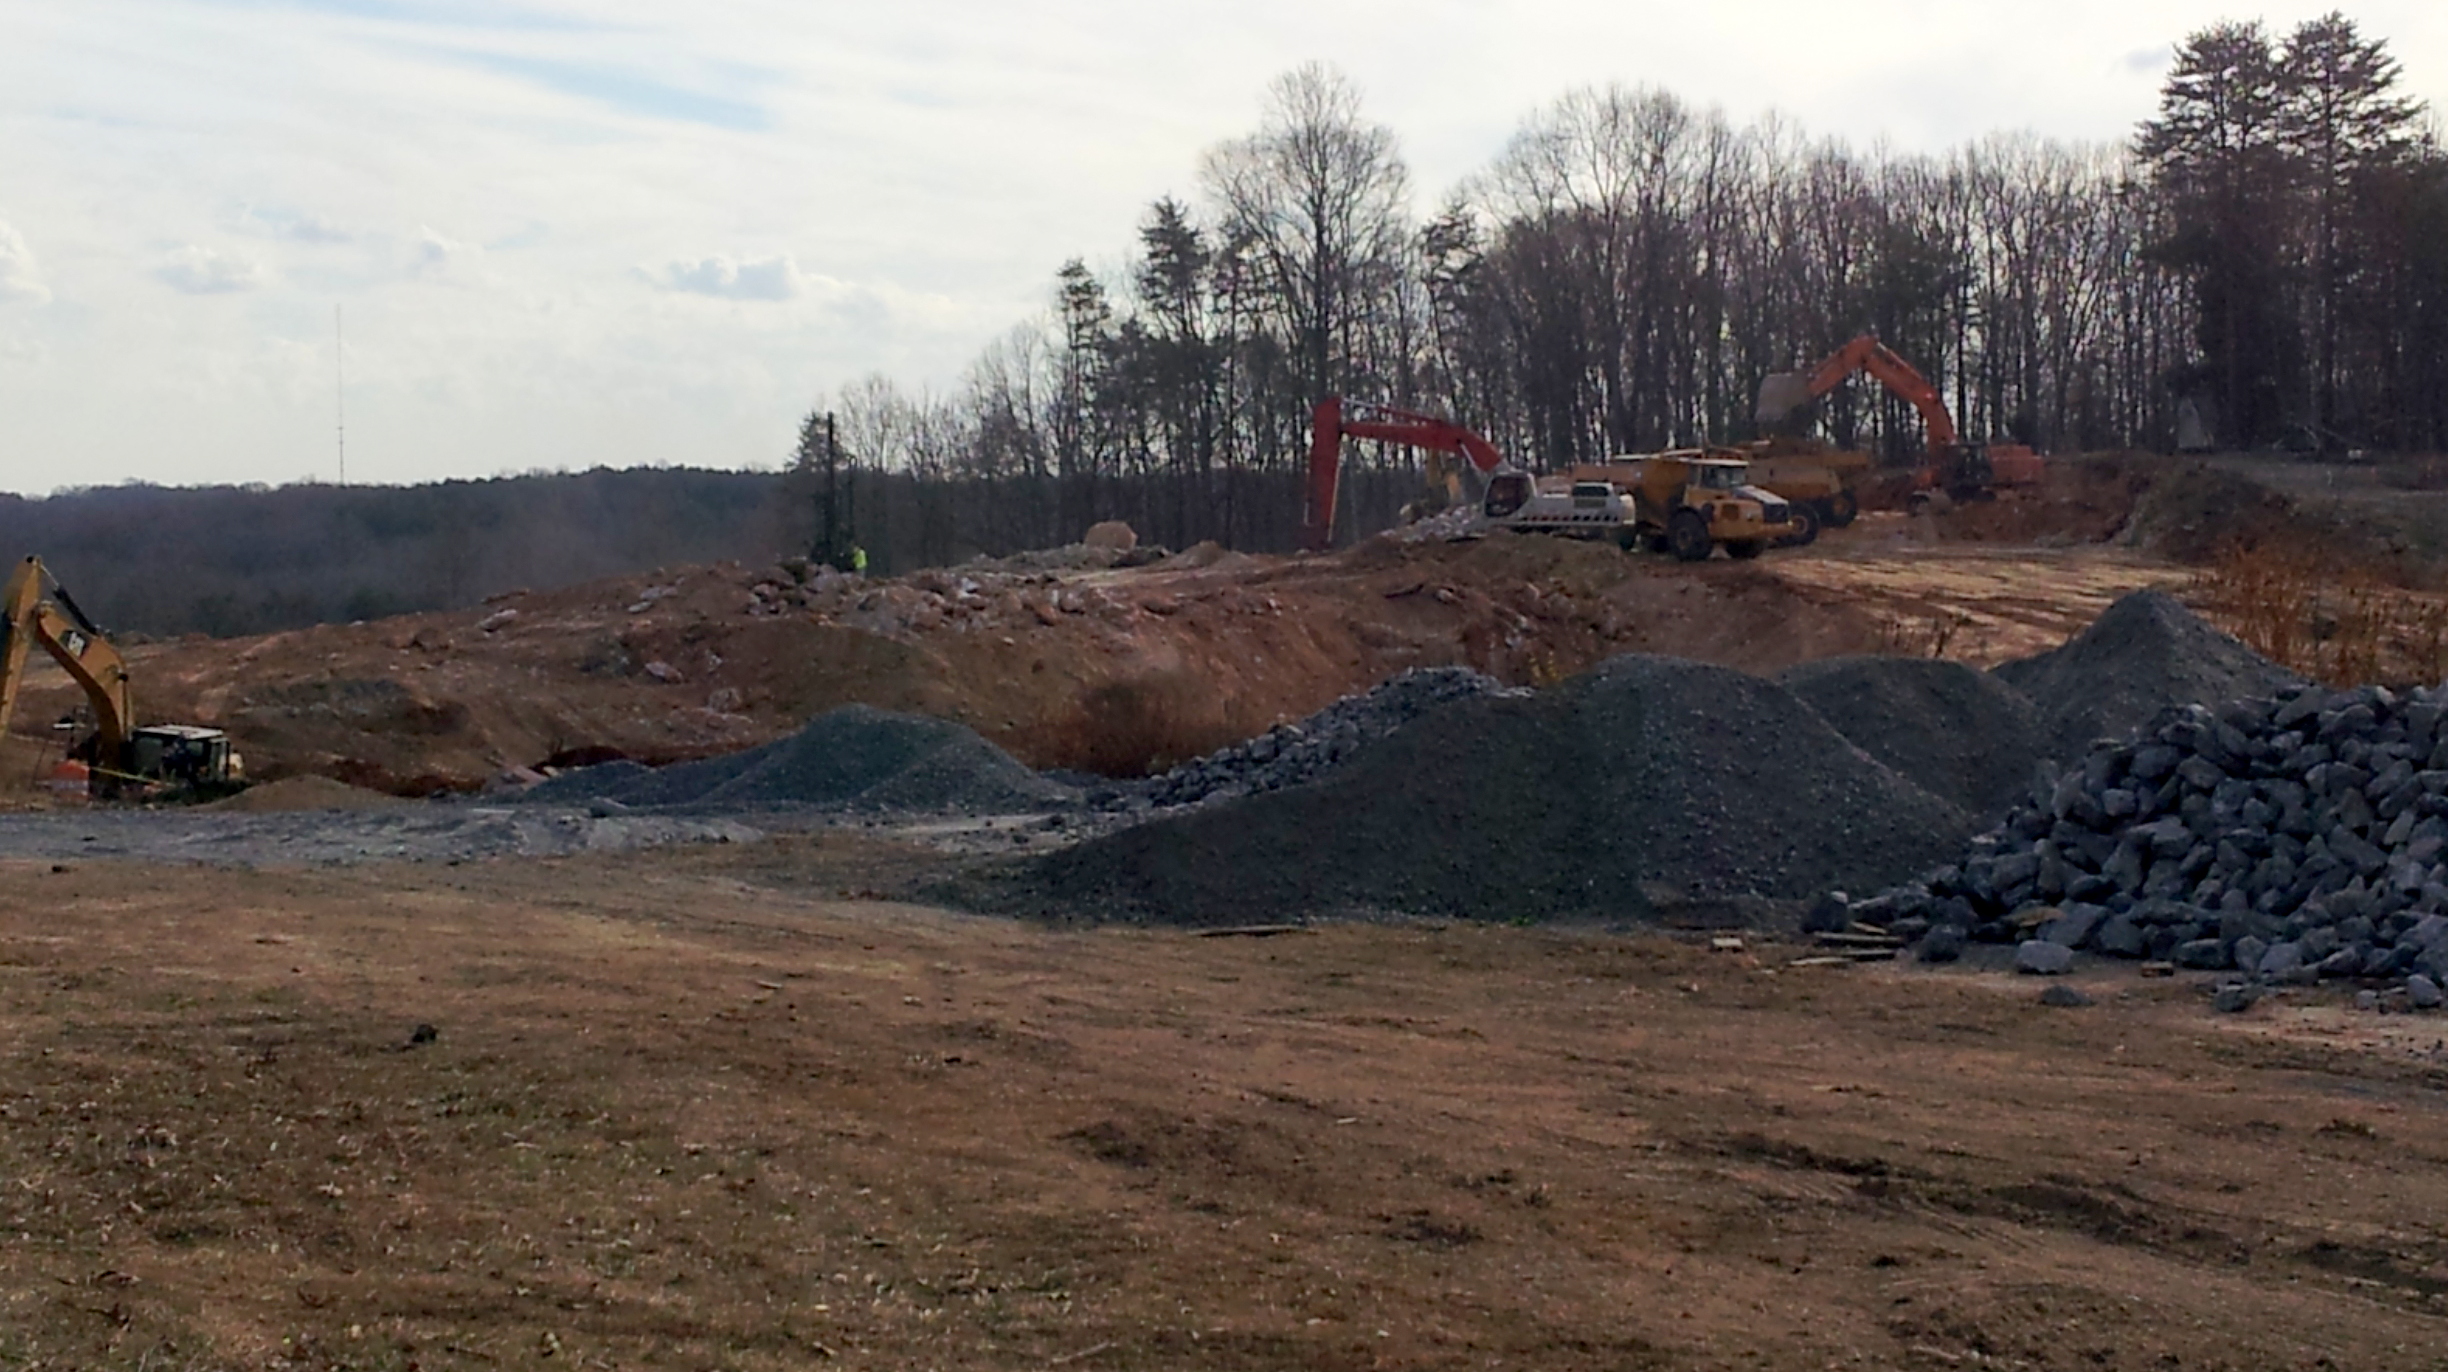 Photo of US 220 construction progress north of Greensboro near US 158, 
Dec. 2012, courtesy of Strider